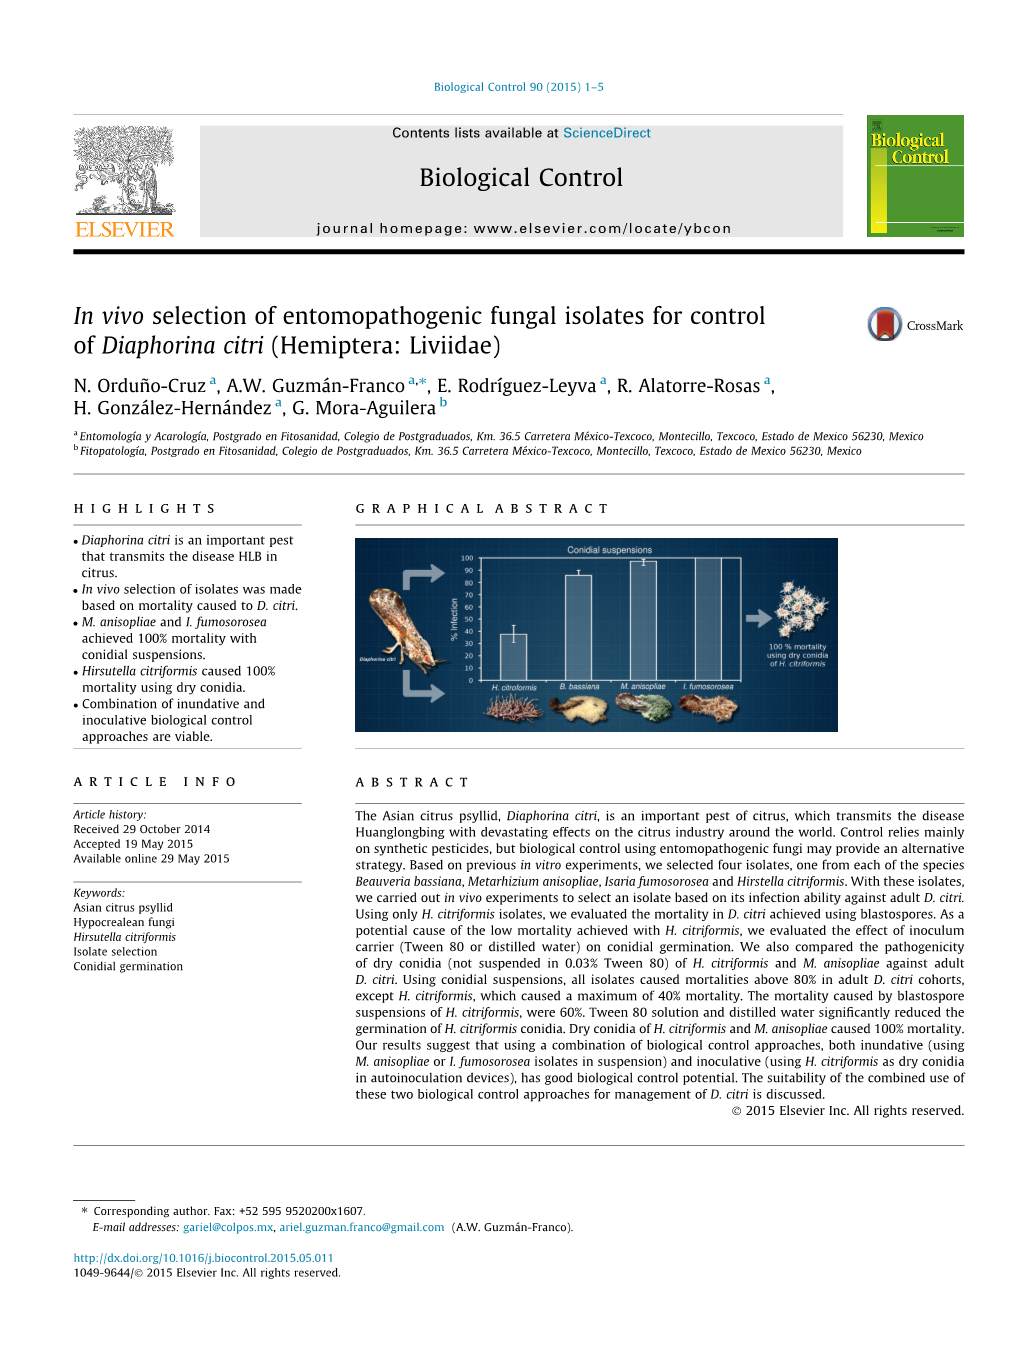 In Vivo Selection of Entomopathogenic Fungal Isolates for Control of Diaphorina Citri (Hemiptera: Liviidae) ⇑ N